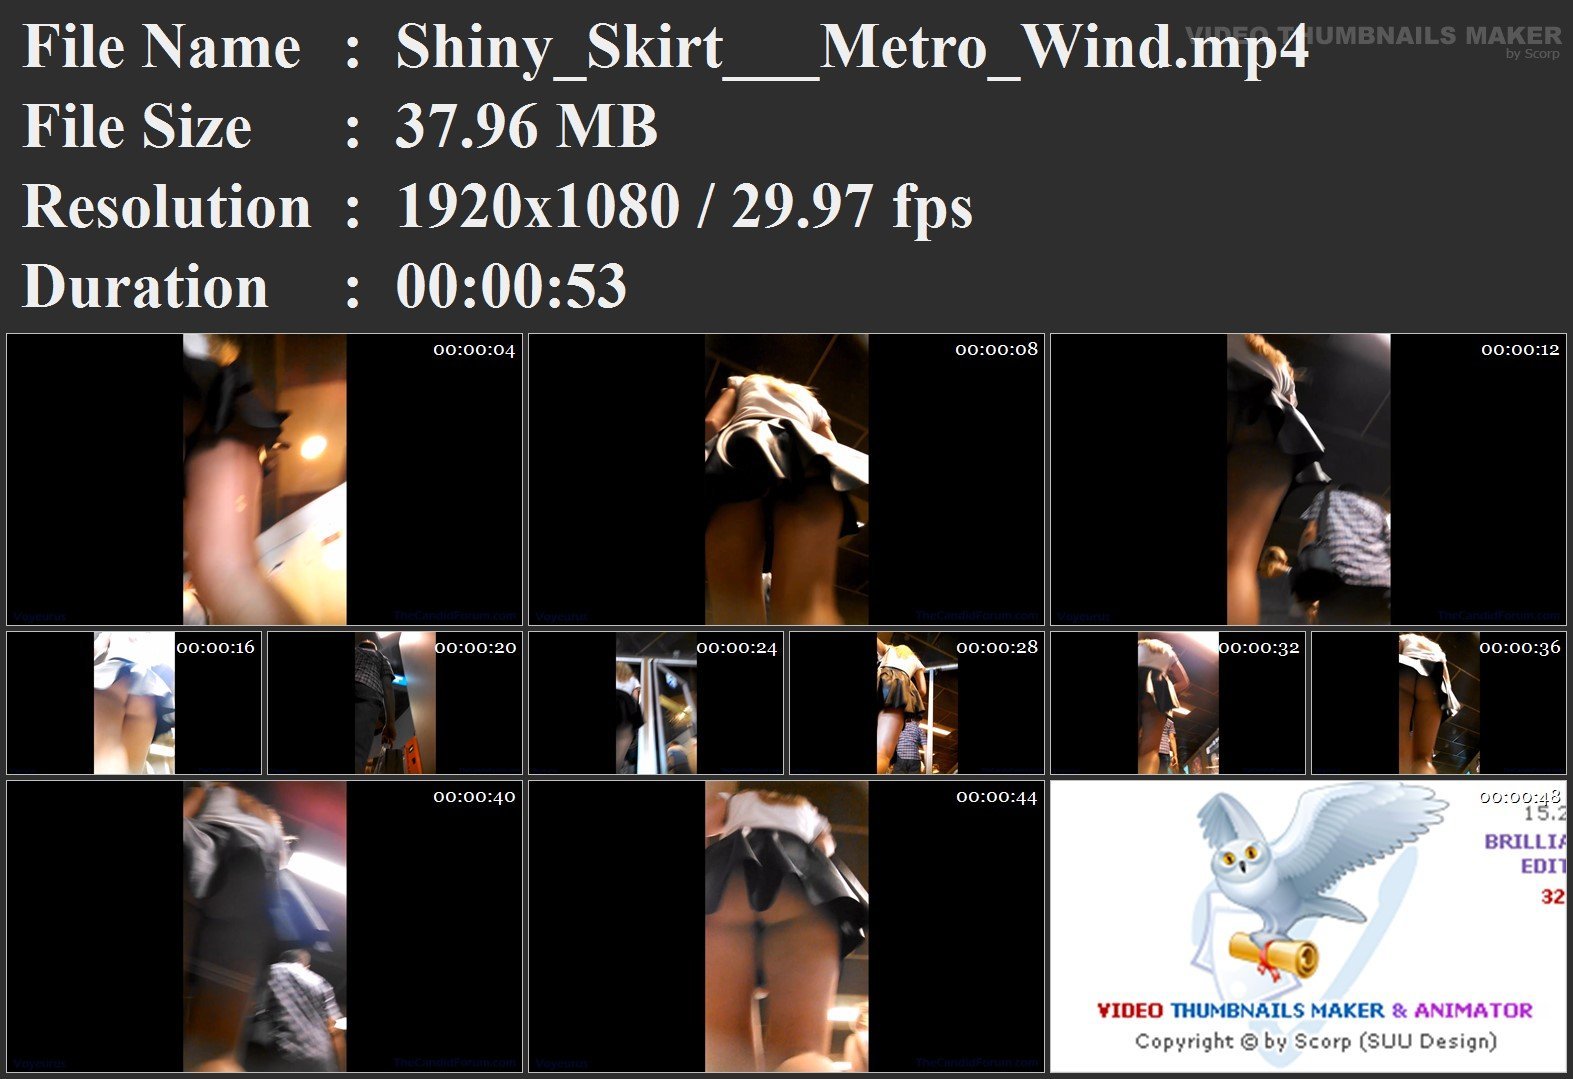 Shiny_Skirt___Metro_Wind.mp4.jpg